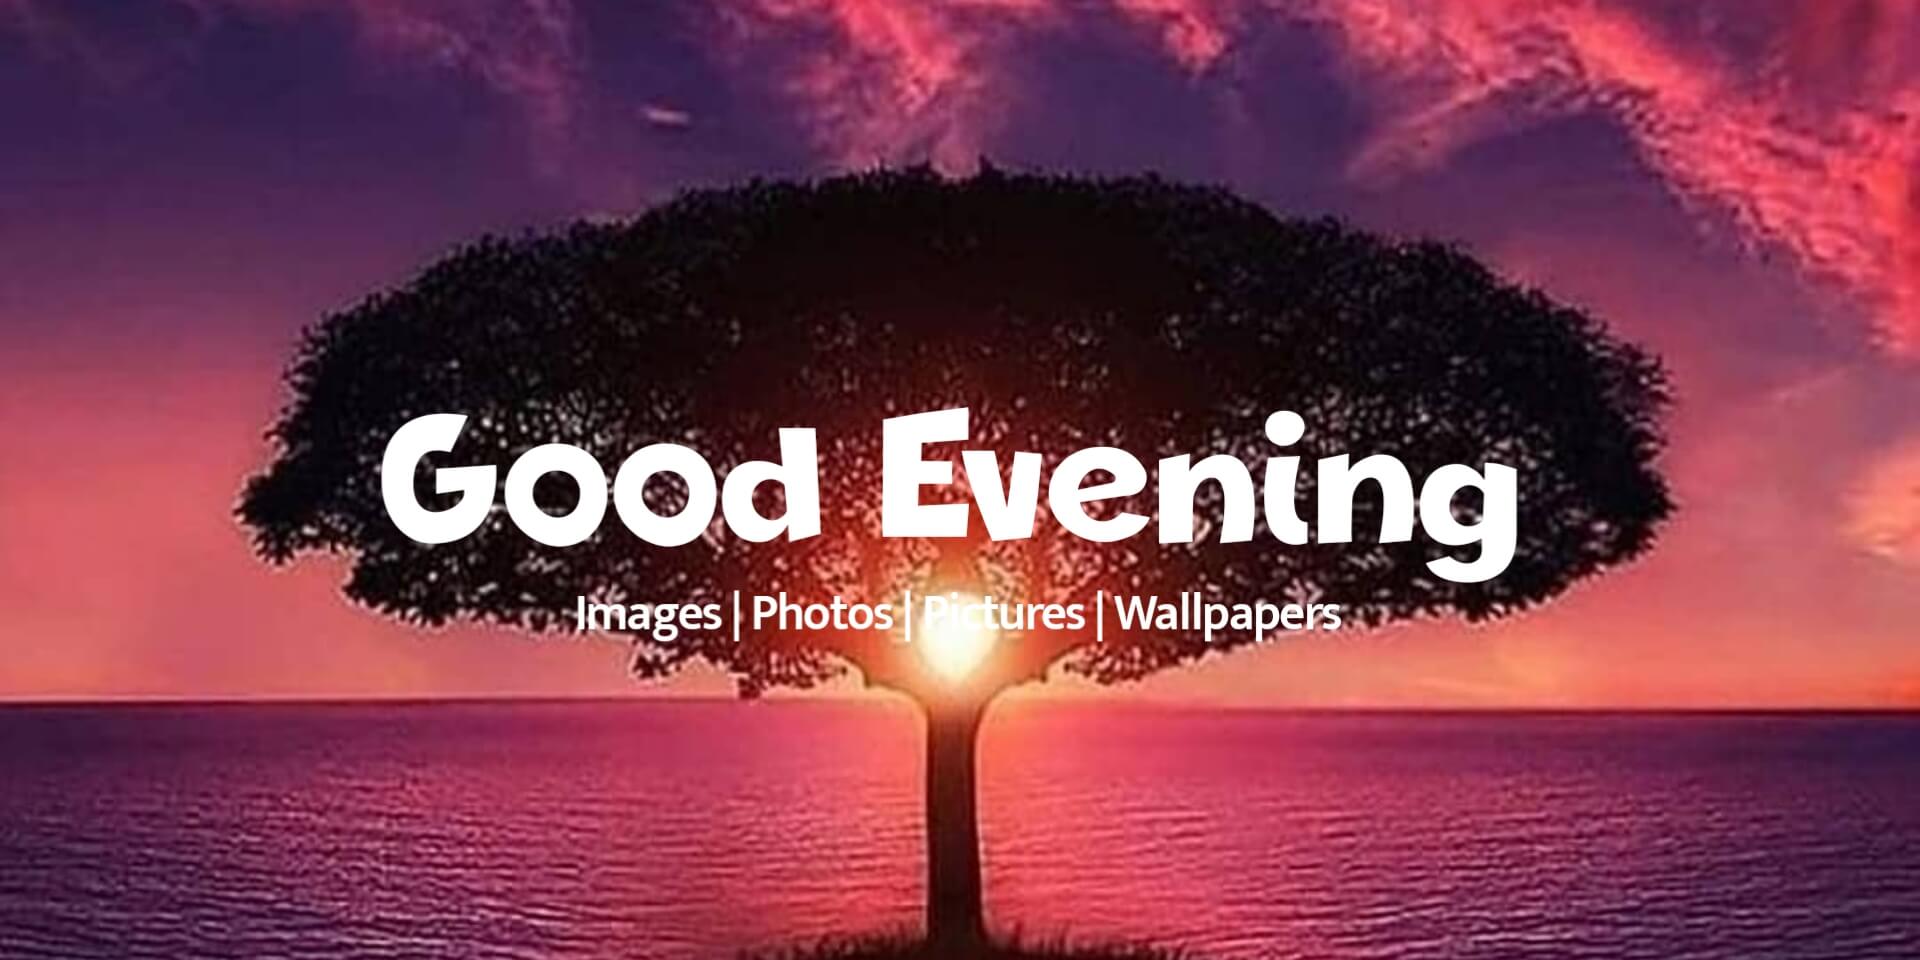 100+ Beautiful Good Evening Images, Photos & Pictures 2023